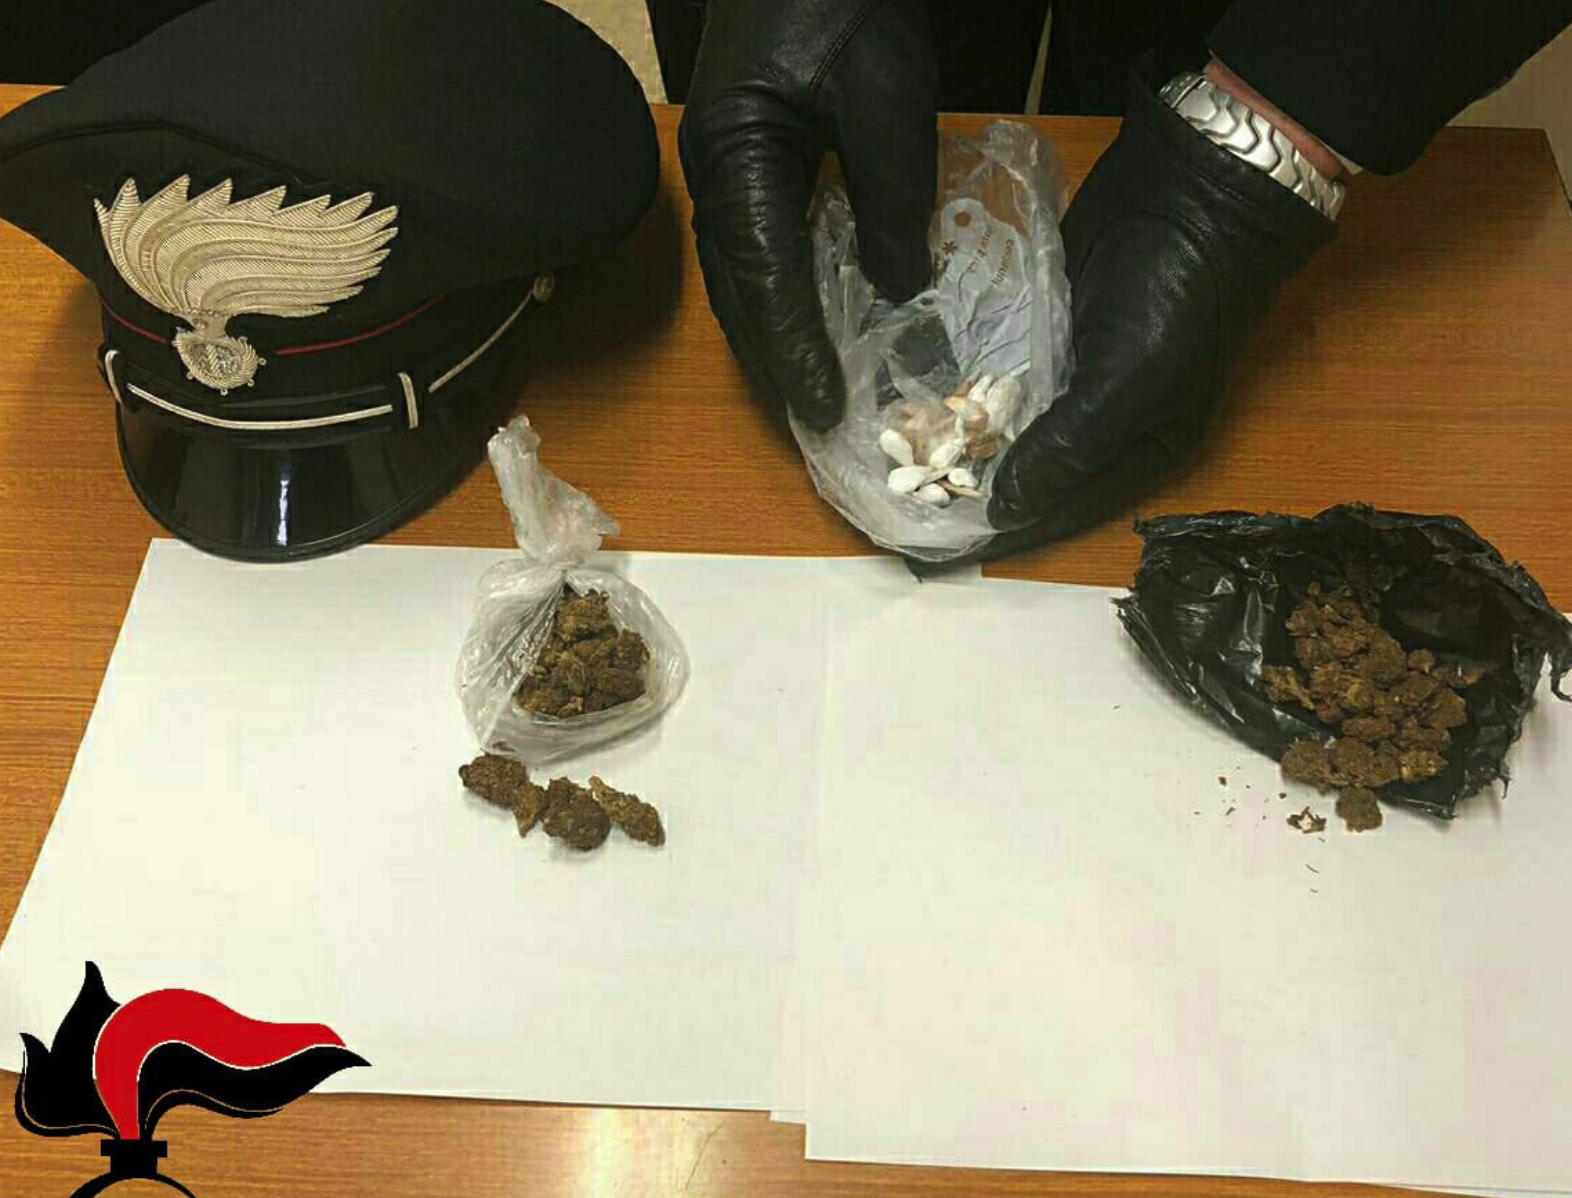 Marijuana trovata dai Carabinieri (foto d'archivio)